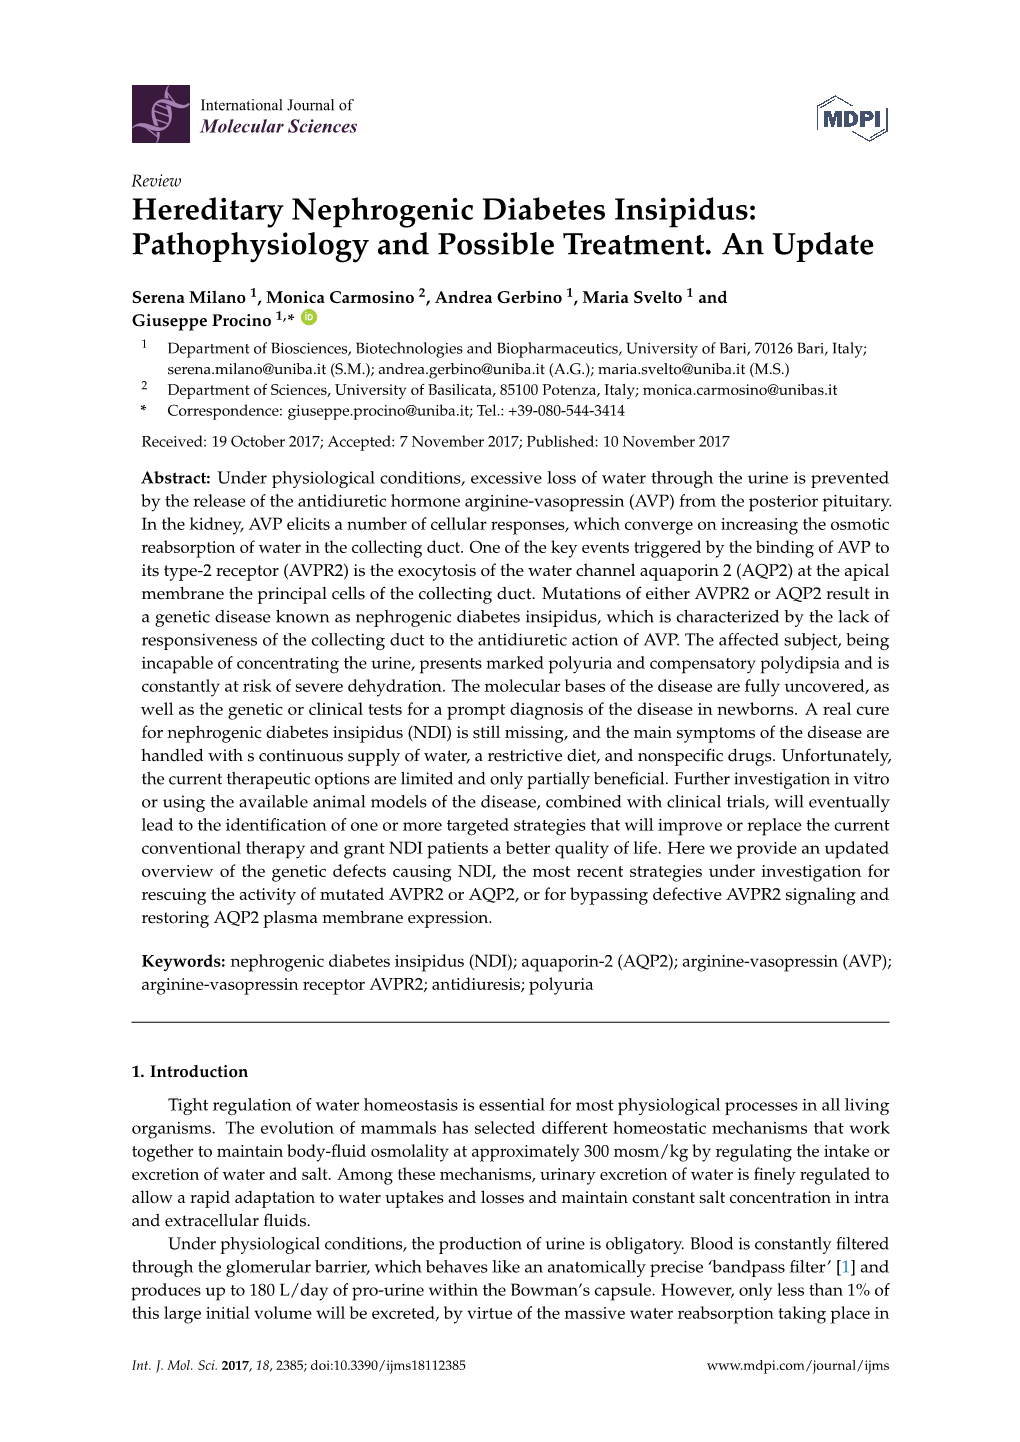 Hereditary Nephrogenic Diabetes Insipidus: Pathophysiology and Possible Treatment